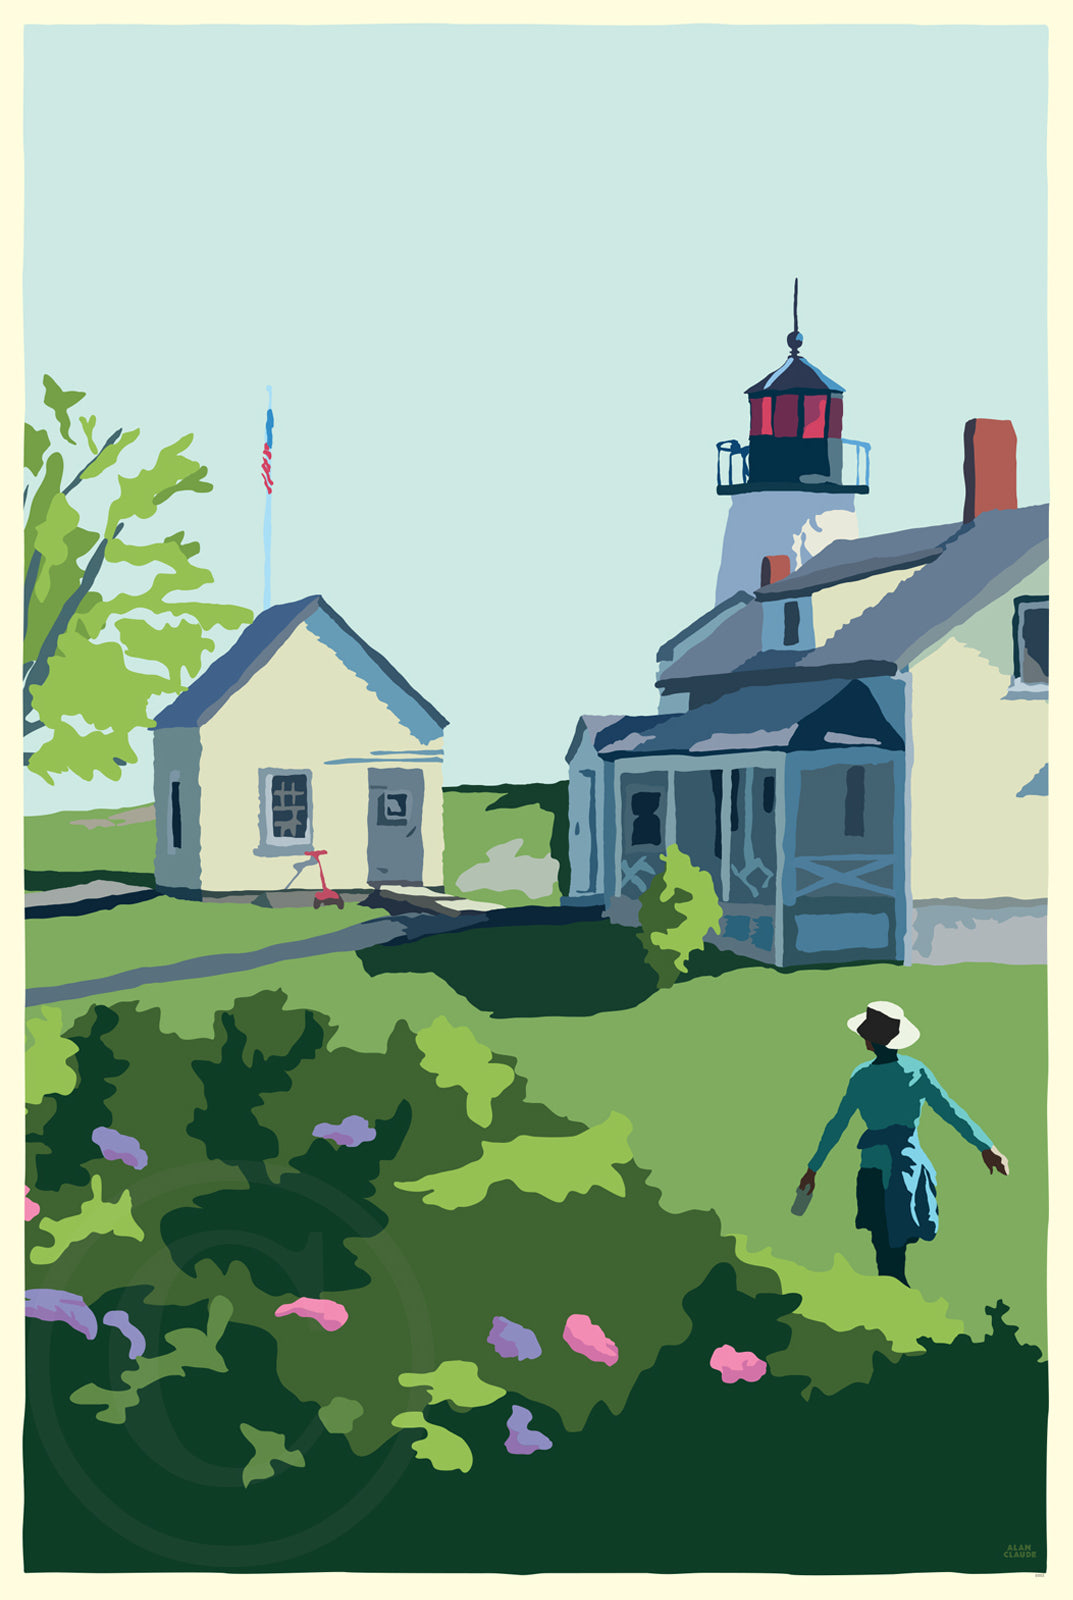 A Summer's Day On Burnt Island Light Art Print 36" x 53" Wall Poster - Maine